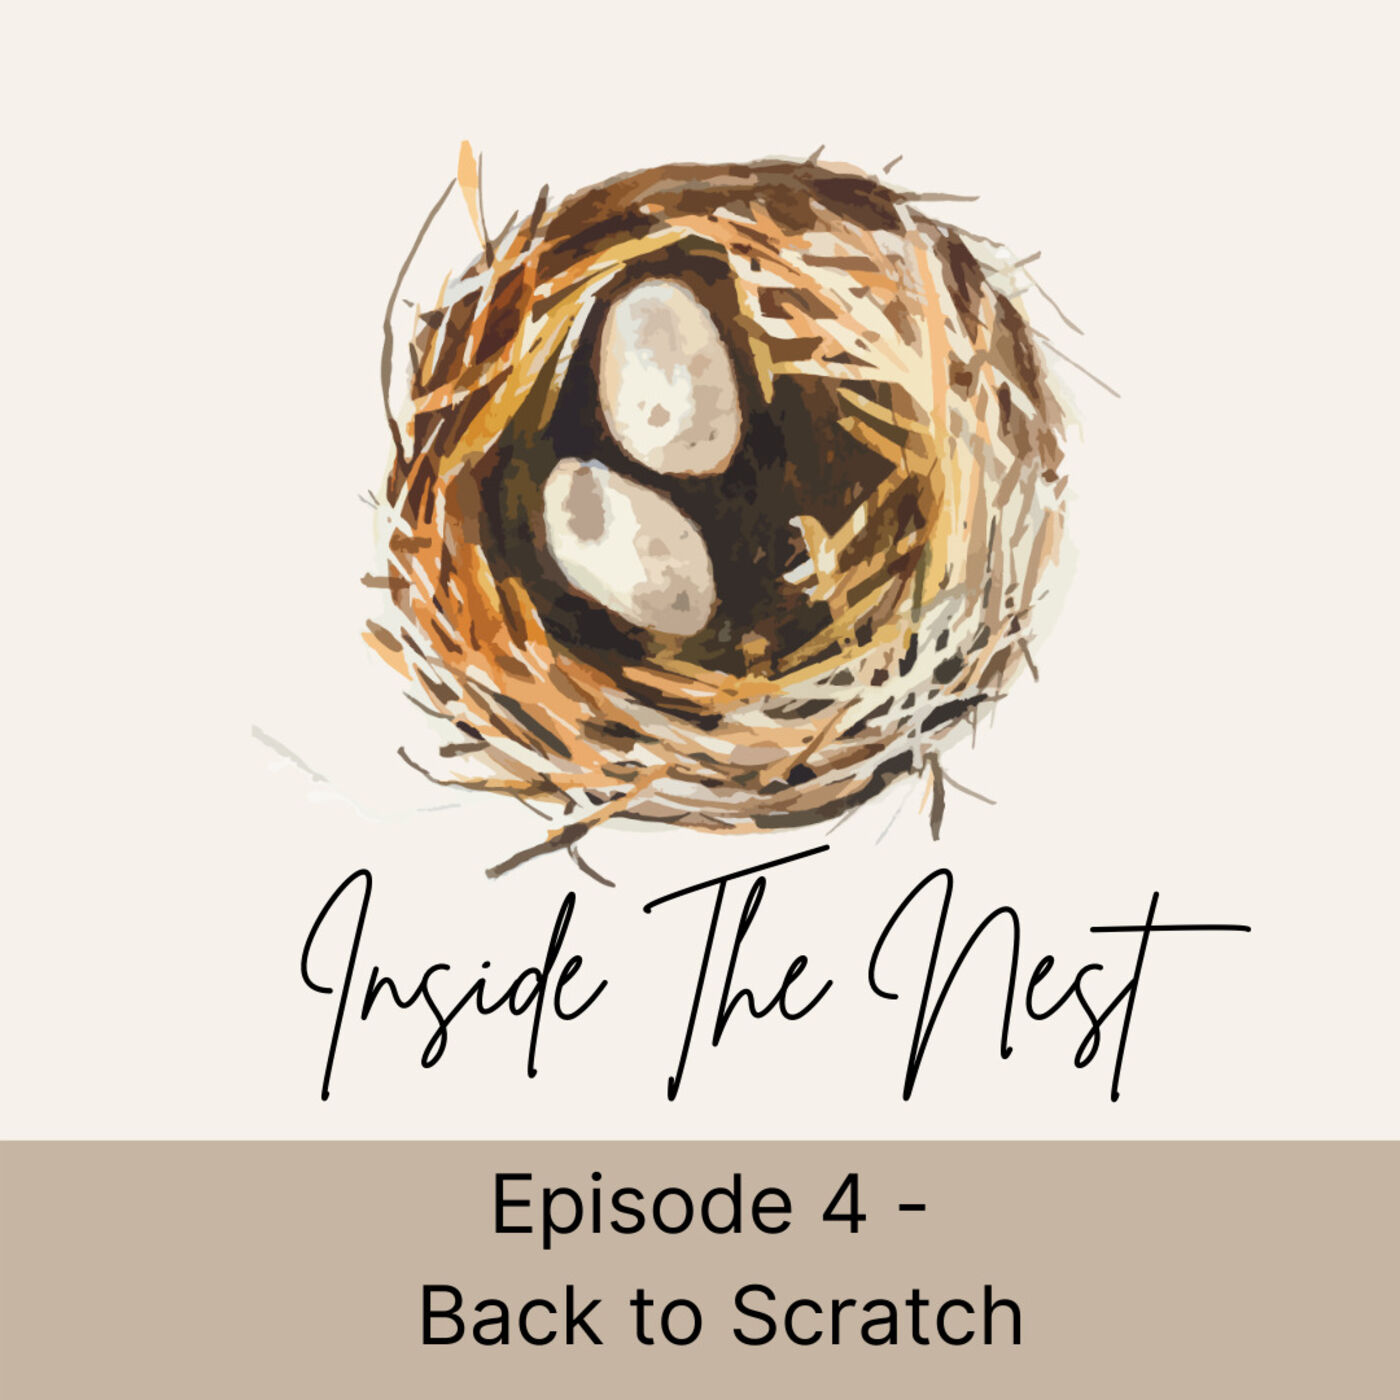 Inside the Nest Episode 4 - Back to Scratch Image